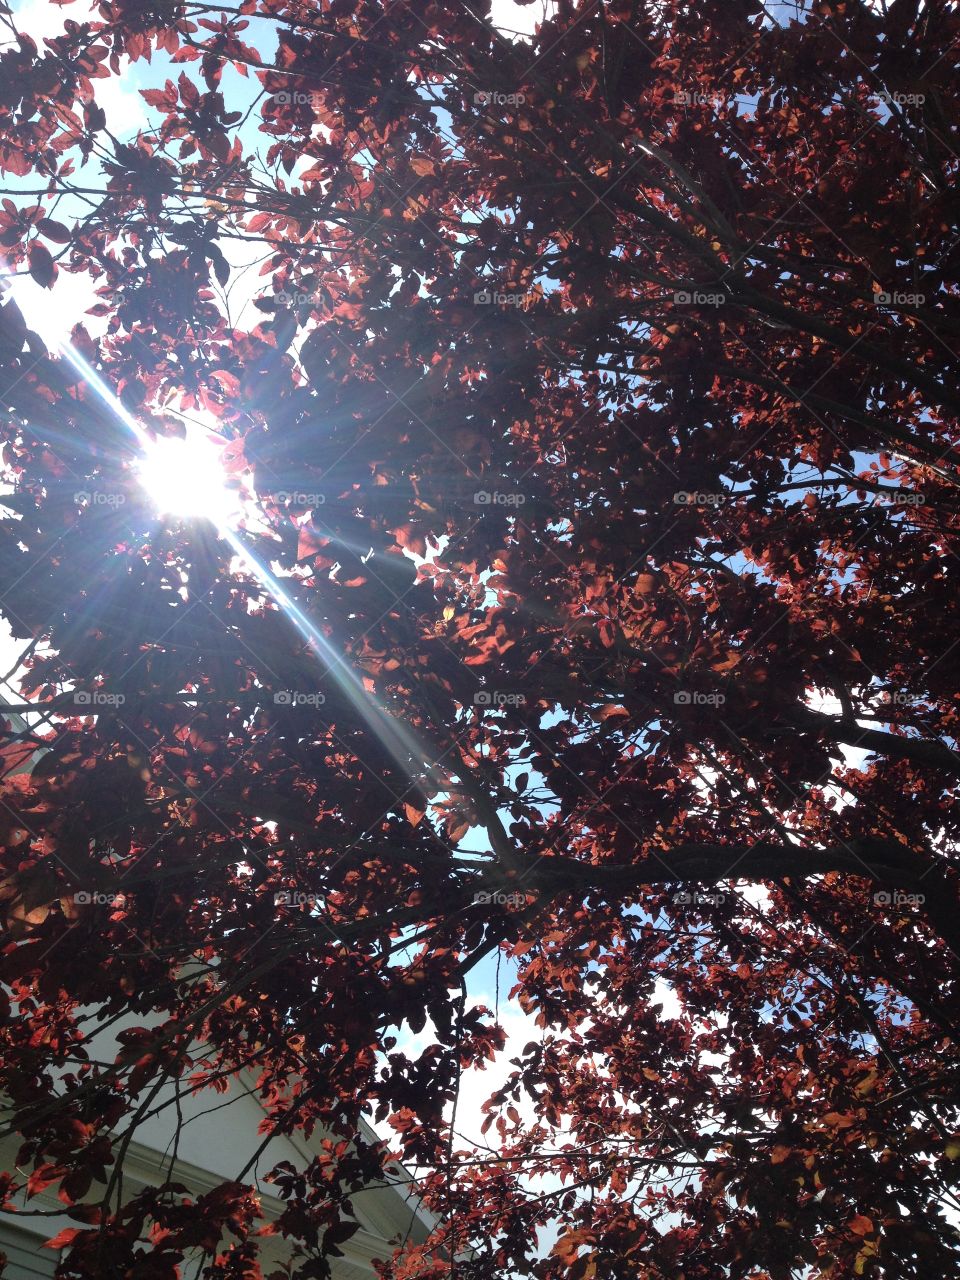 Sunlight through red leaves